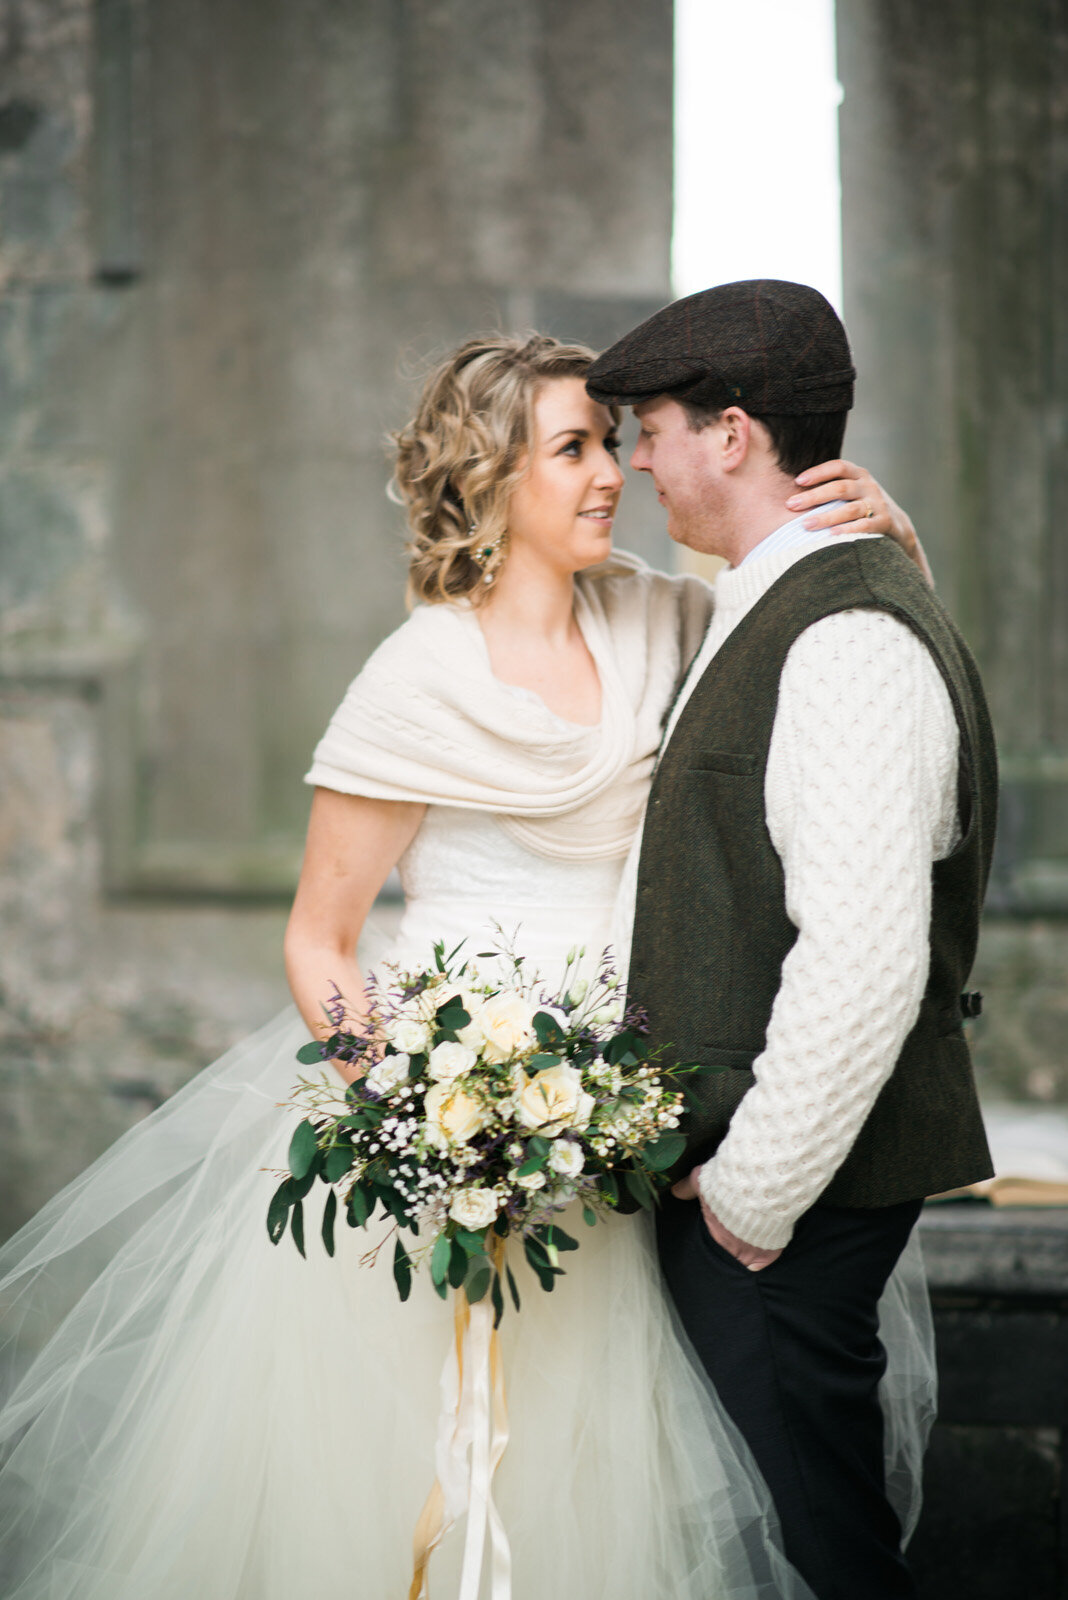 Kate-Murtaugh-Events-Ireland-international-destination-wedding-planner-Irish-altar-stone-castle-first-look